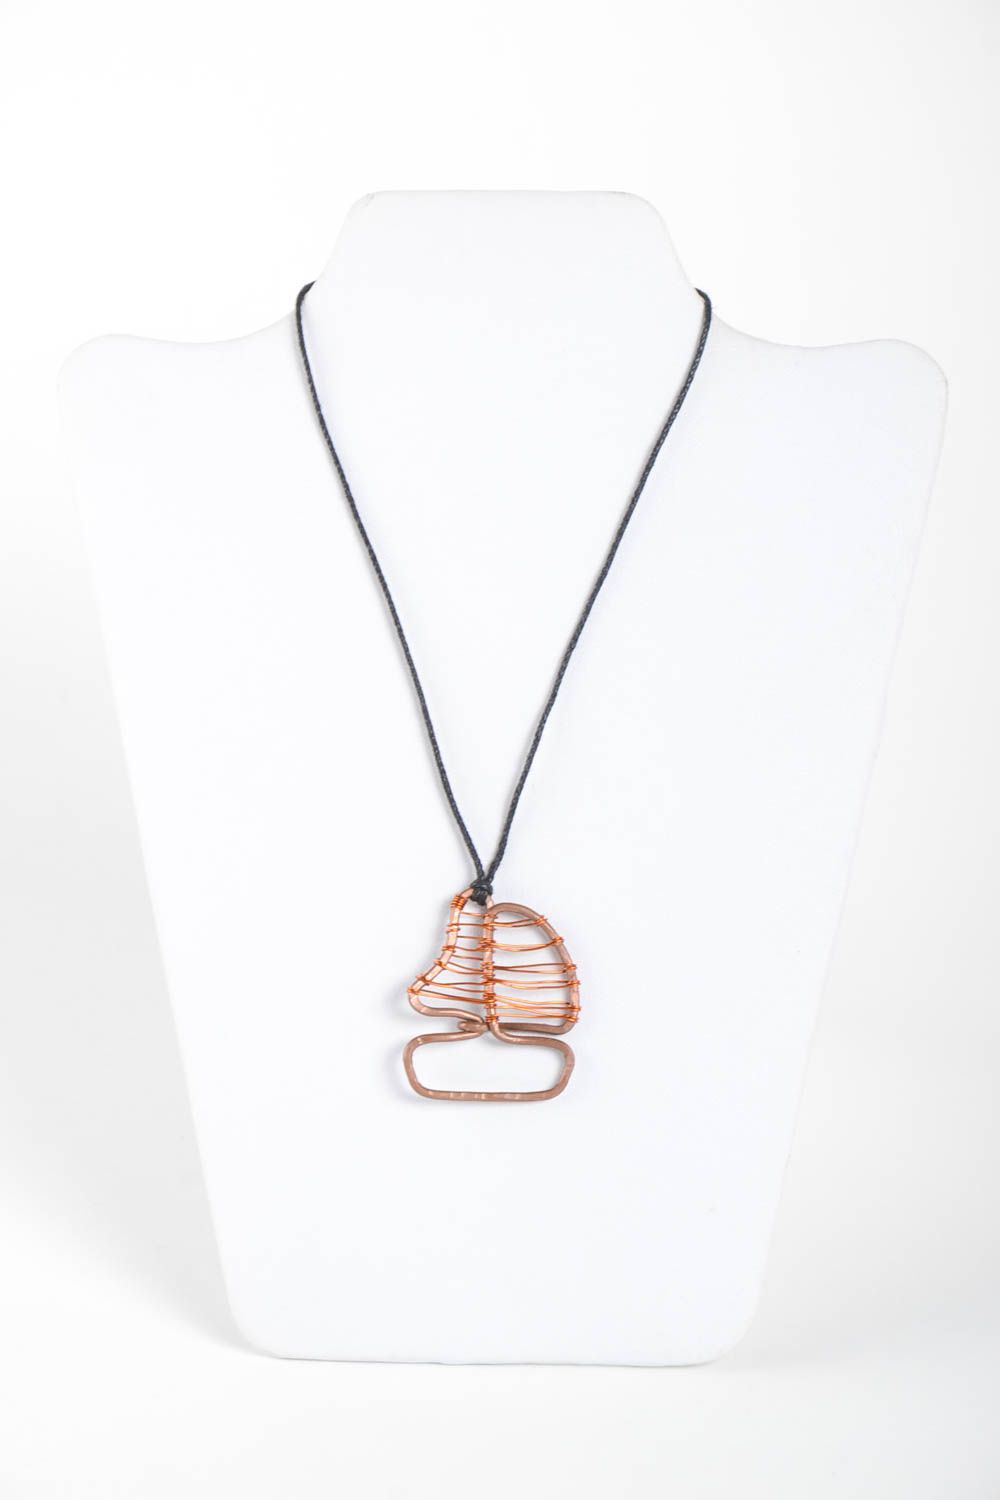 Metal copper jewelry handmade pendant wire wrap jewelry stylish accessories photo 2